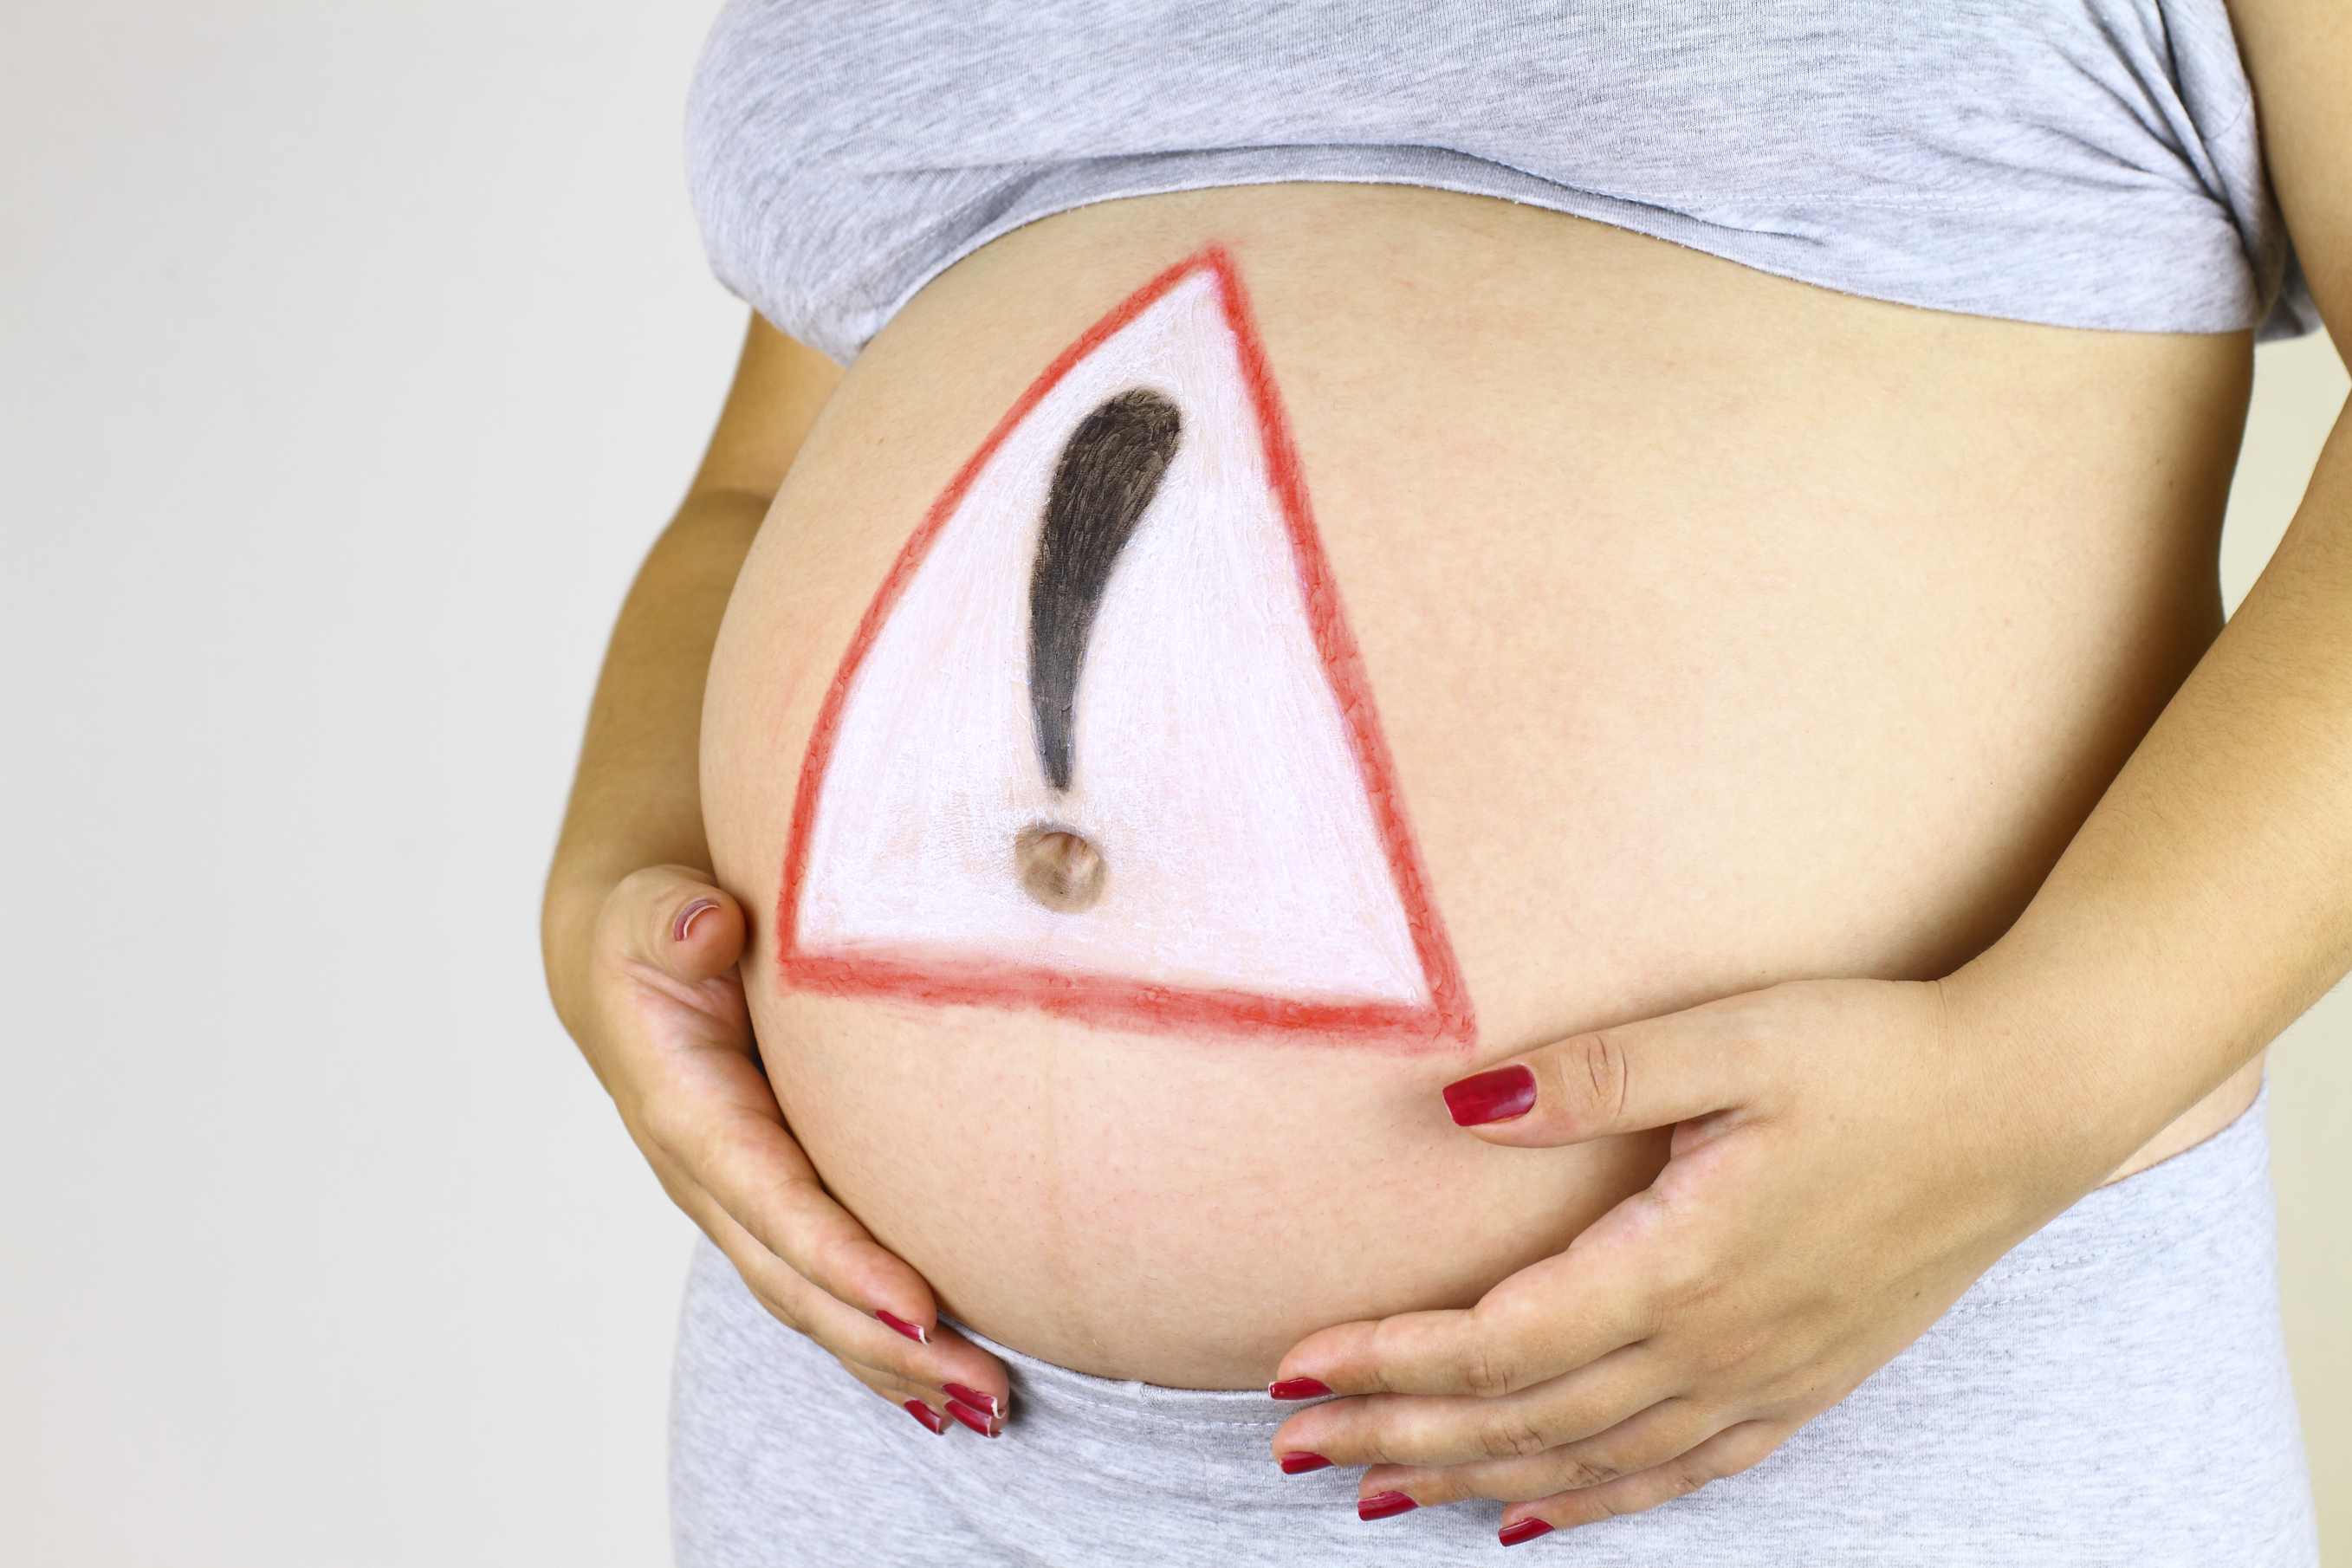 Douleur à la poitrine : règles ou grossesse ?